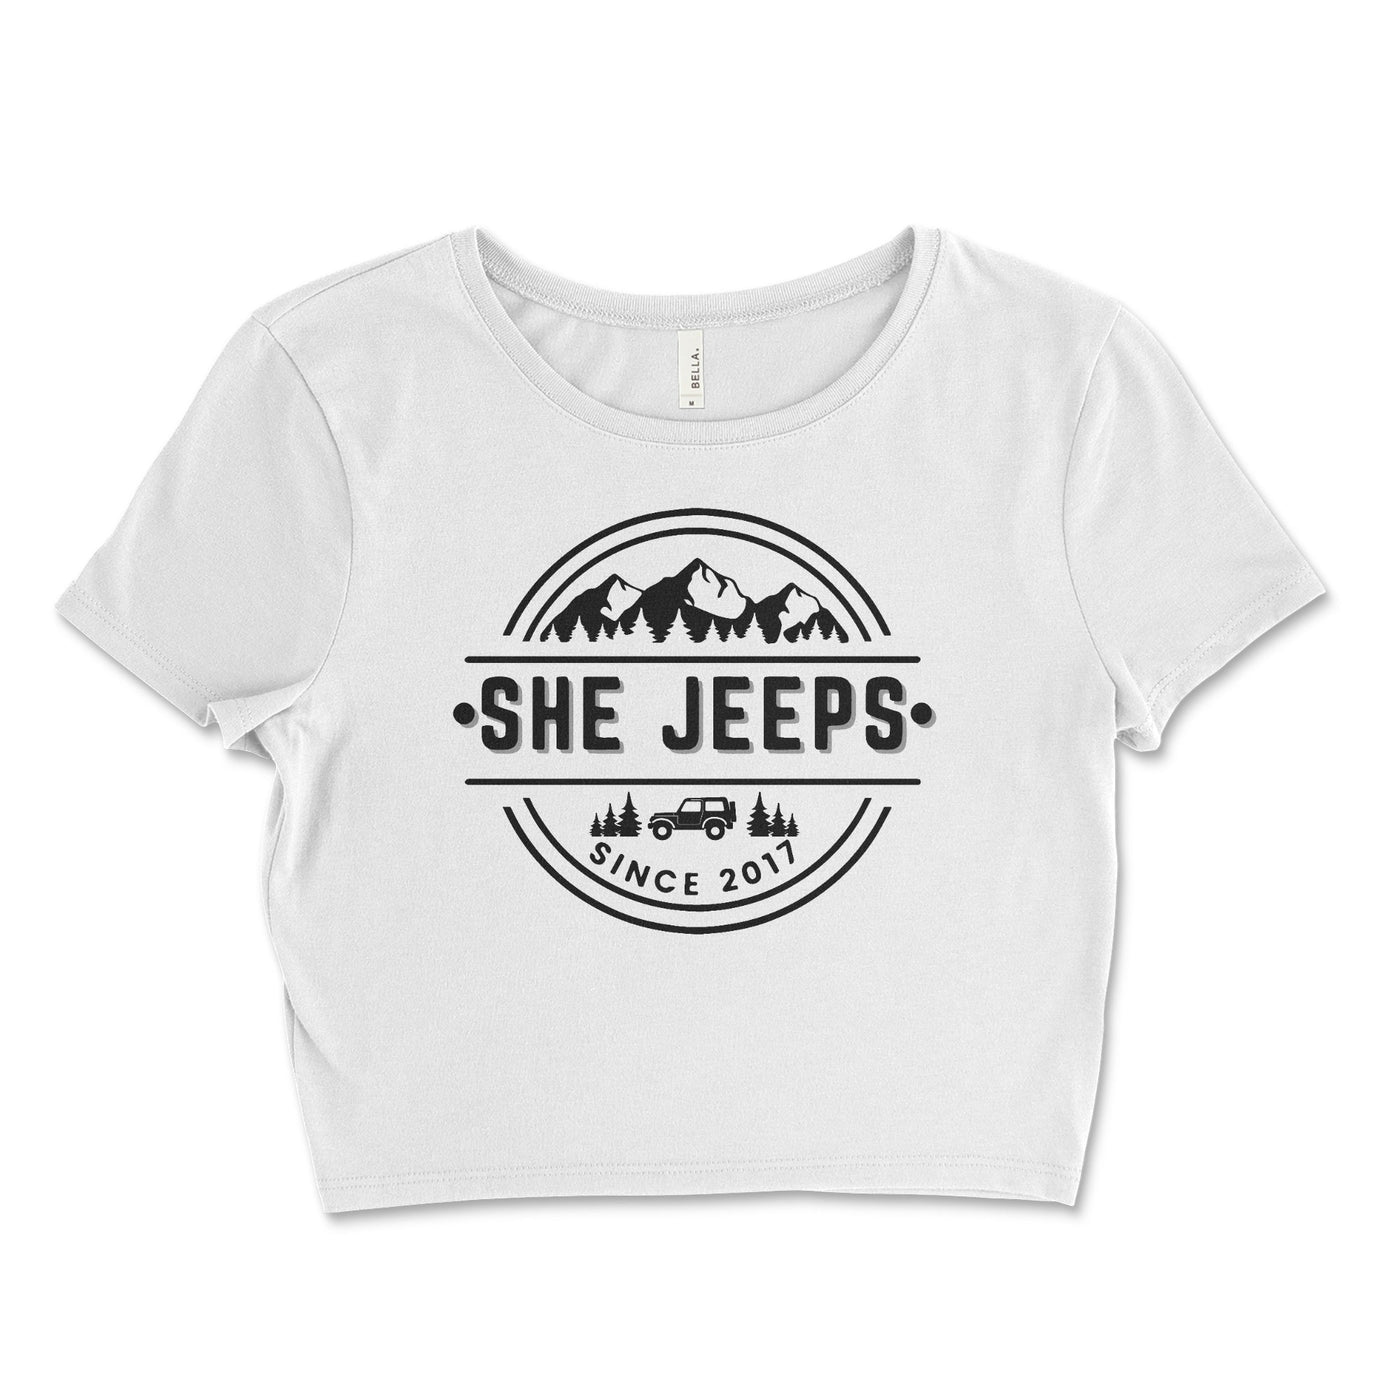 She Jeeps Women's Crop Top - Goats Trail